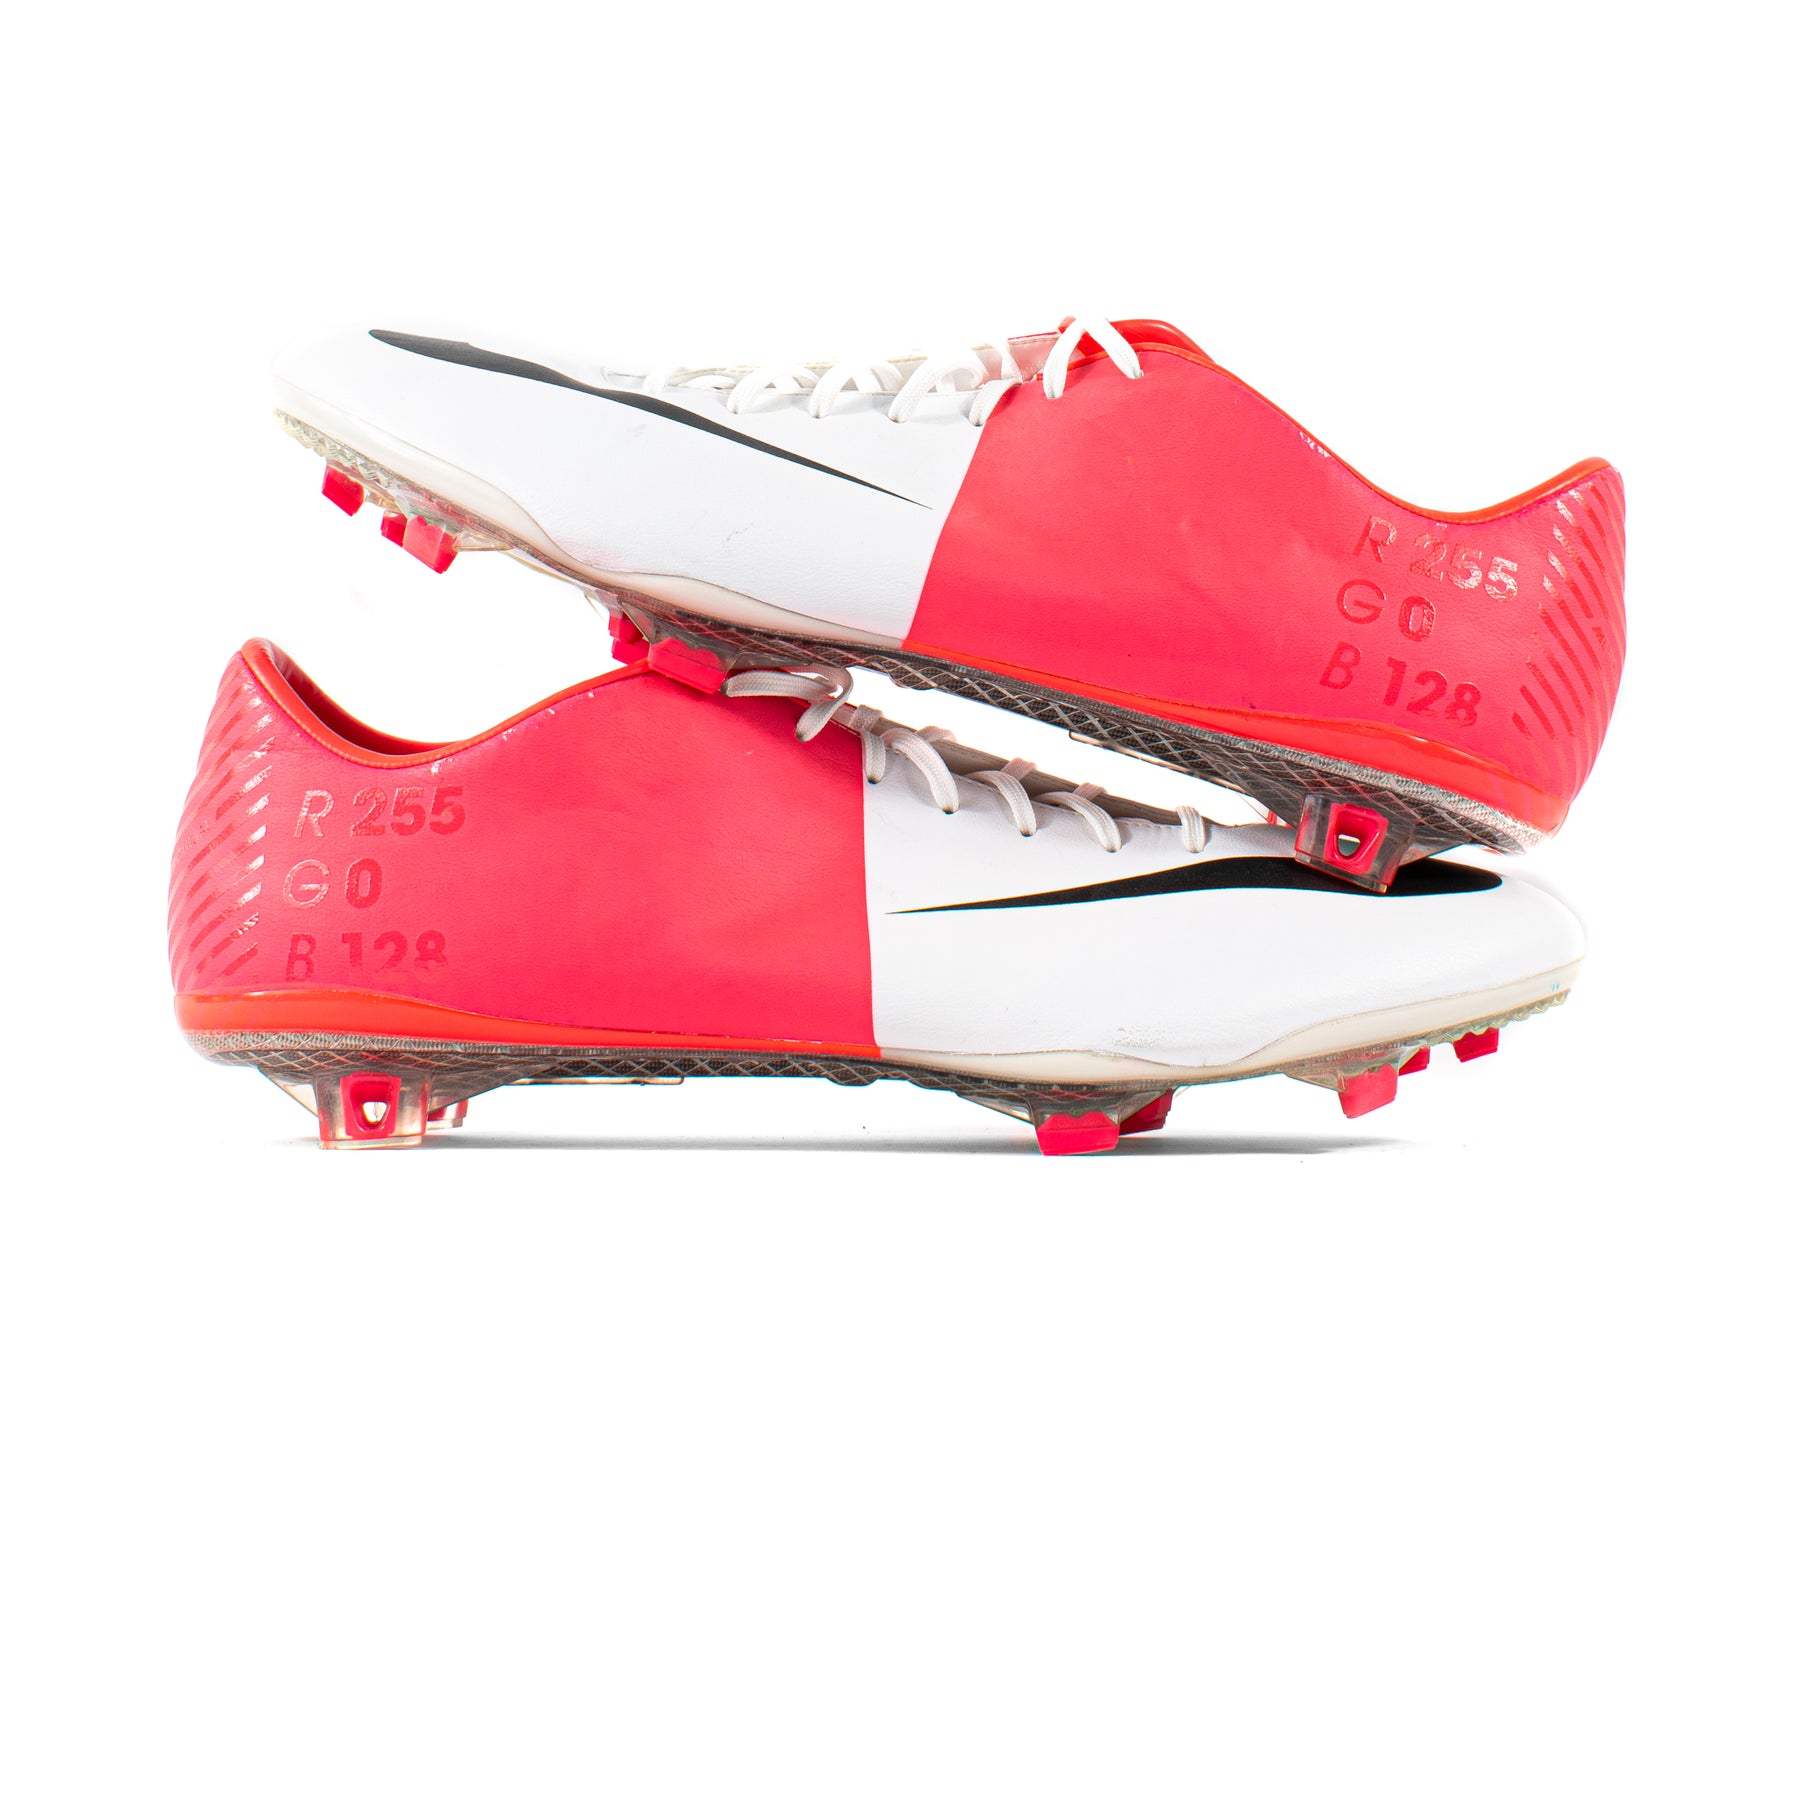 Nike Mercurial VIII Clash 2012 FG – Soccer Cleats